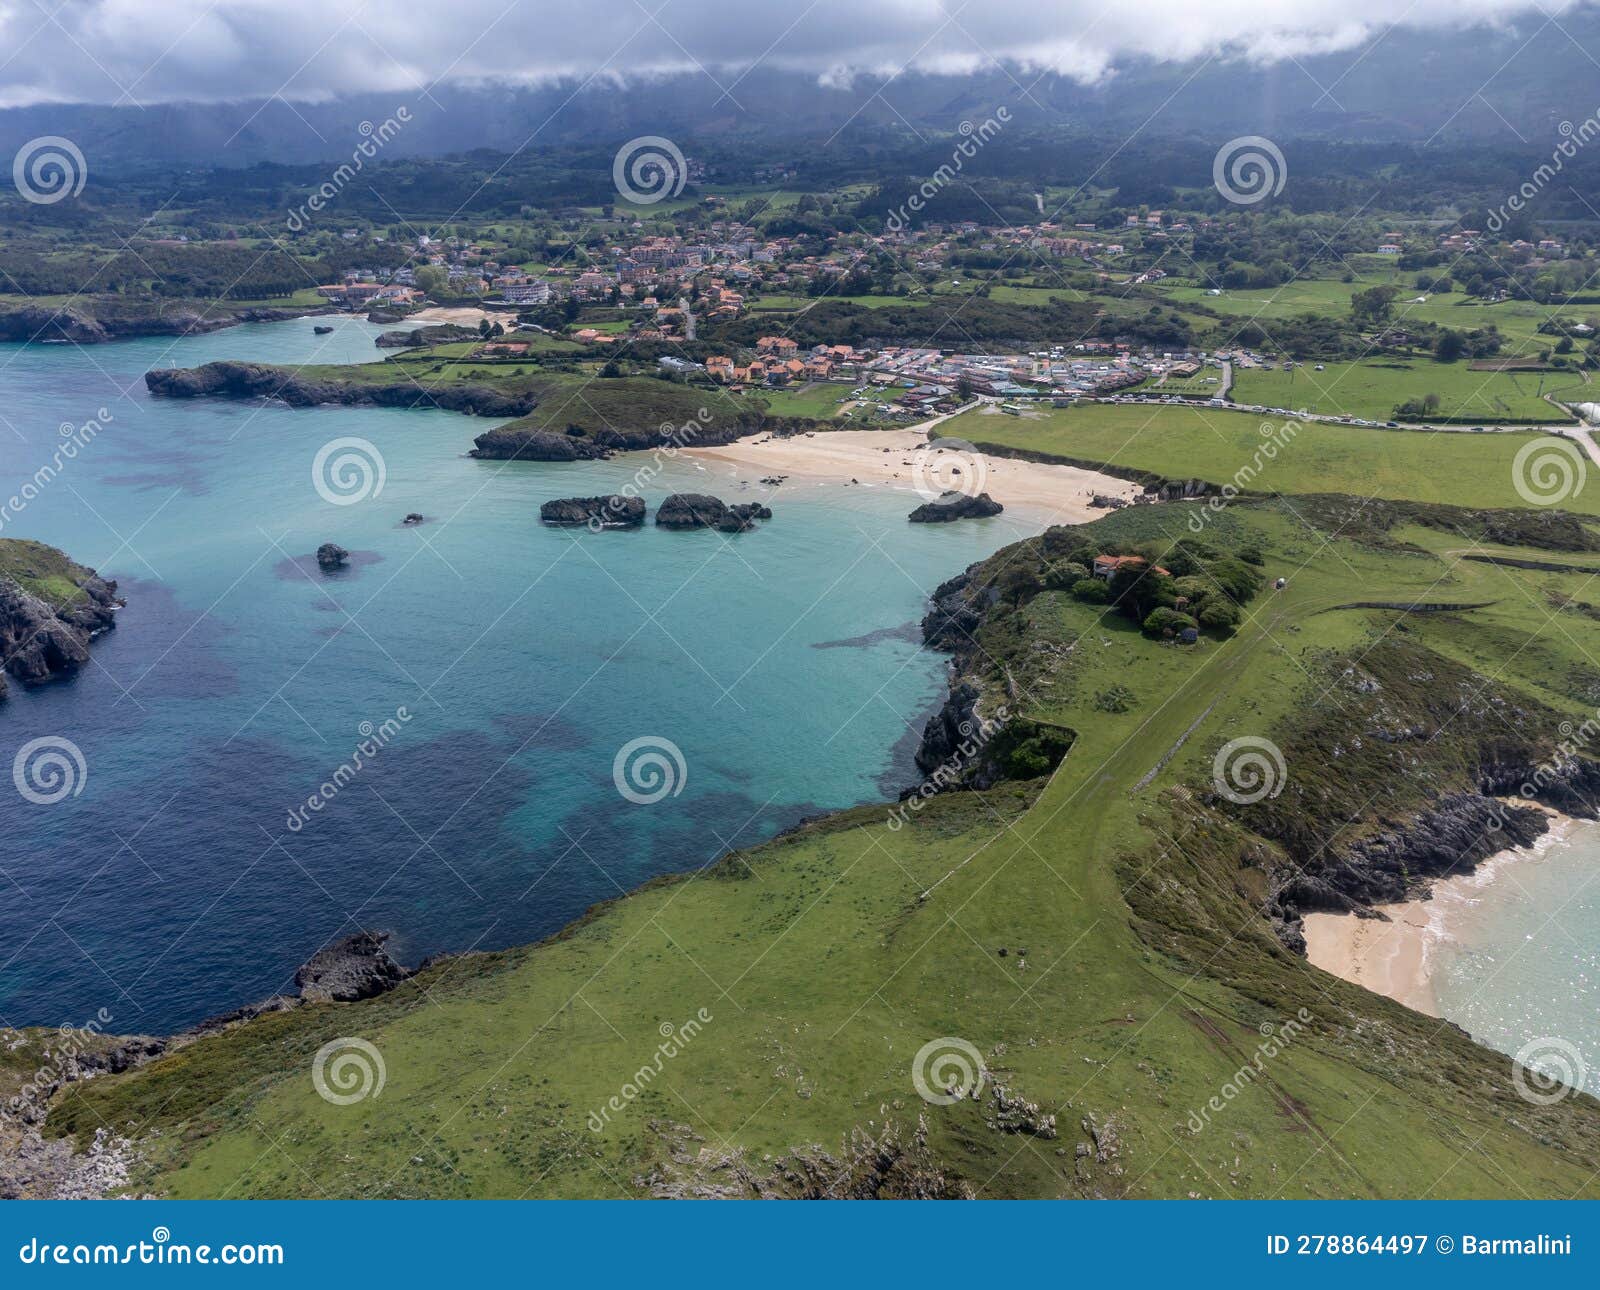 aerial view on playa de palombina, las camaras and celorio, green coast of asturias, north spain with sandy beaches, cliffs,